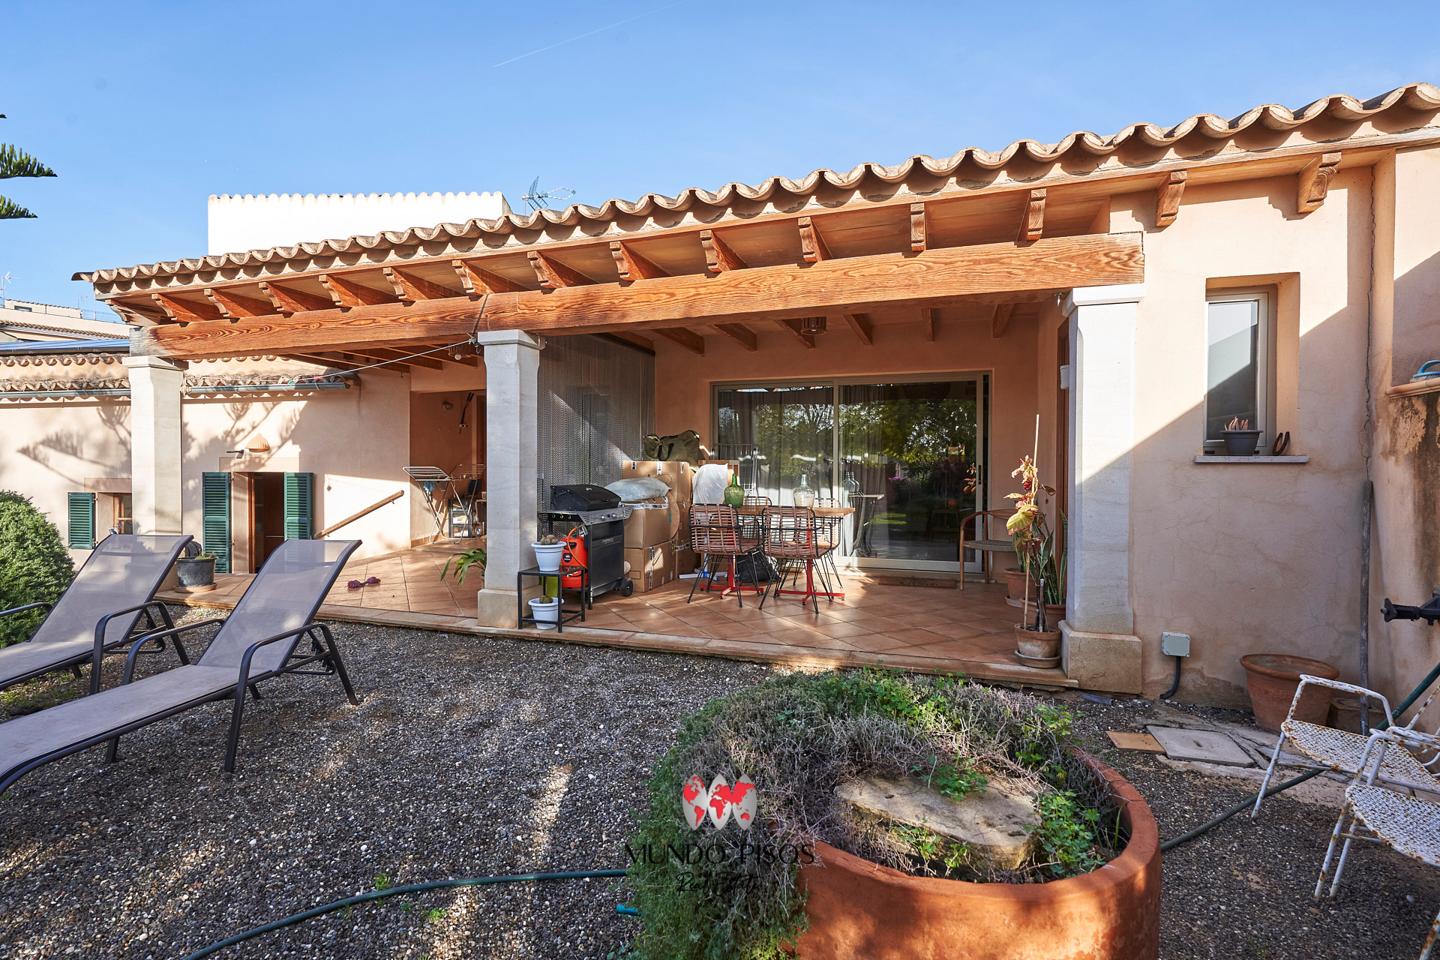 Casa mallorquina en Establiments, Palma de Mallorca, Illes Balears